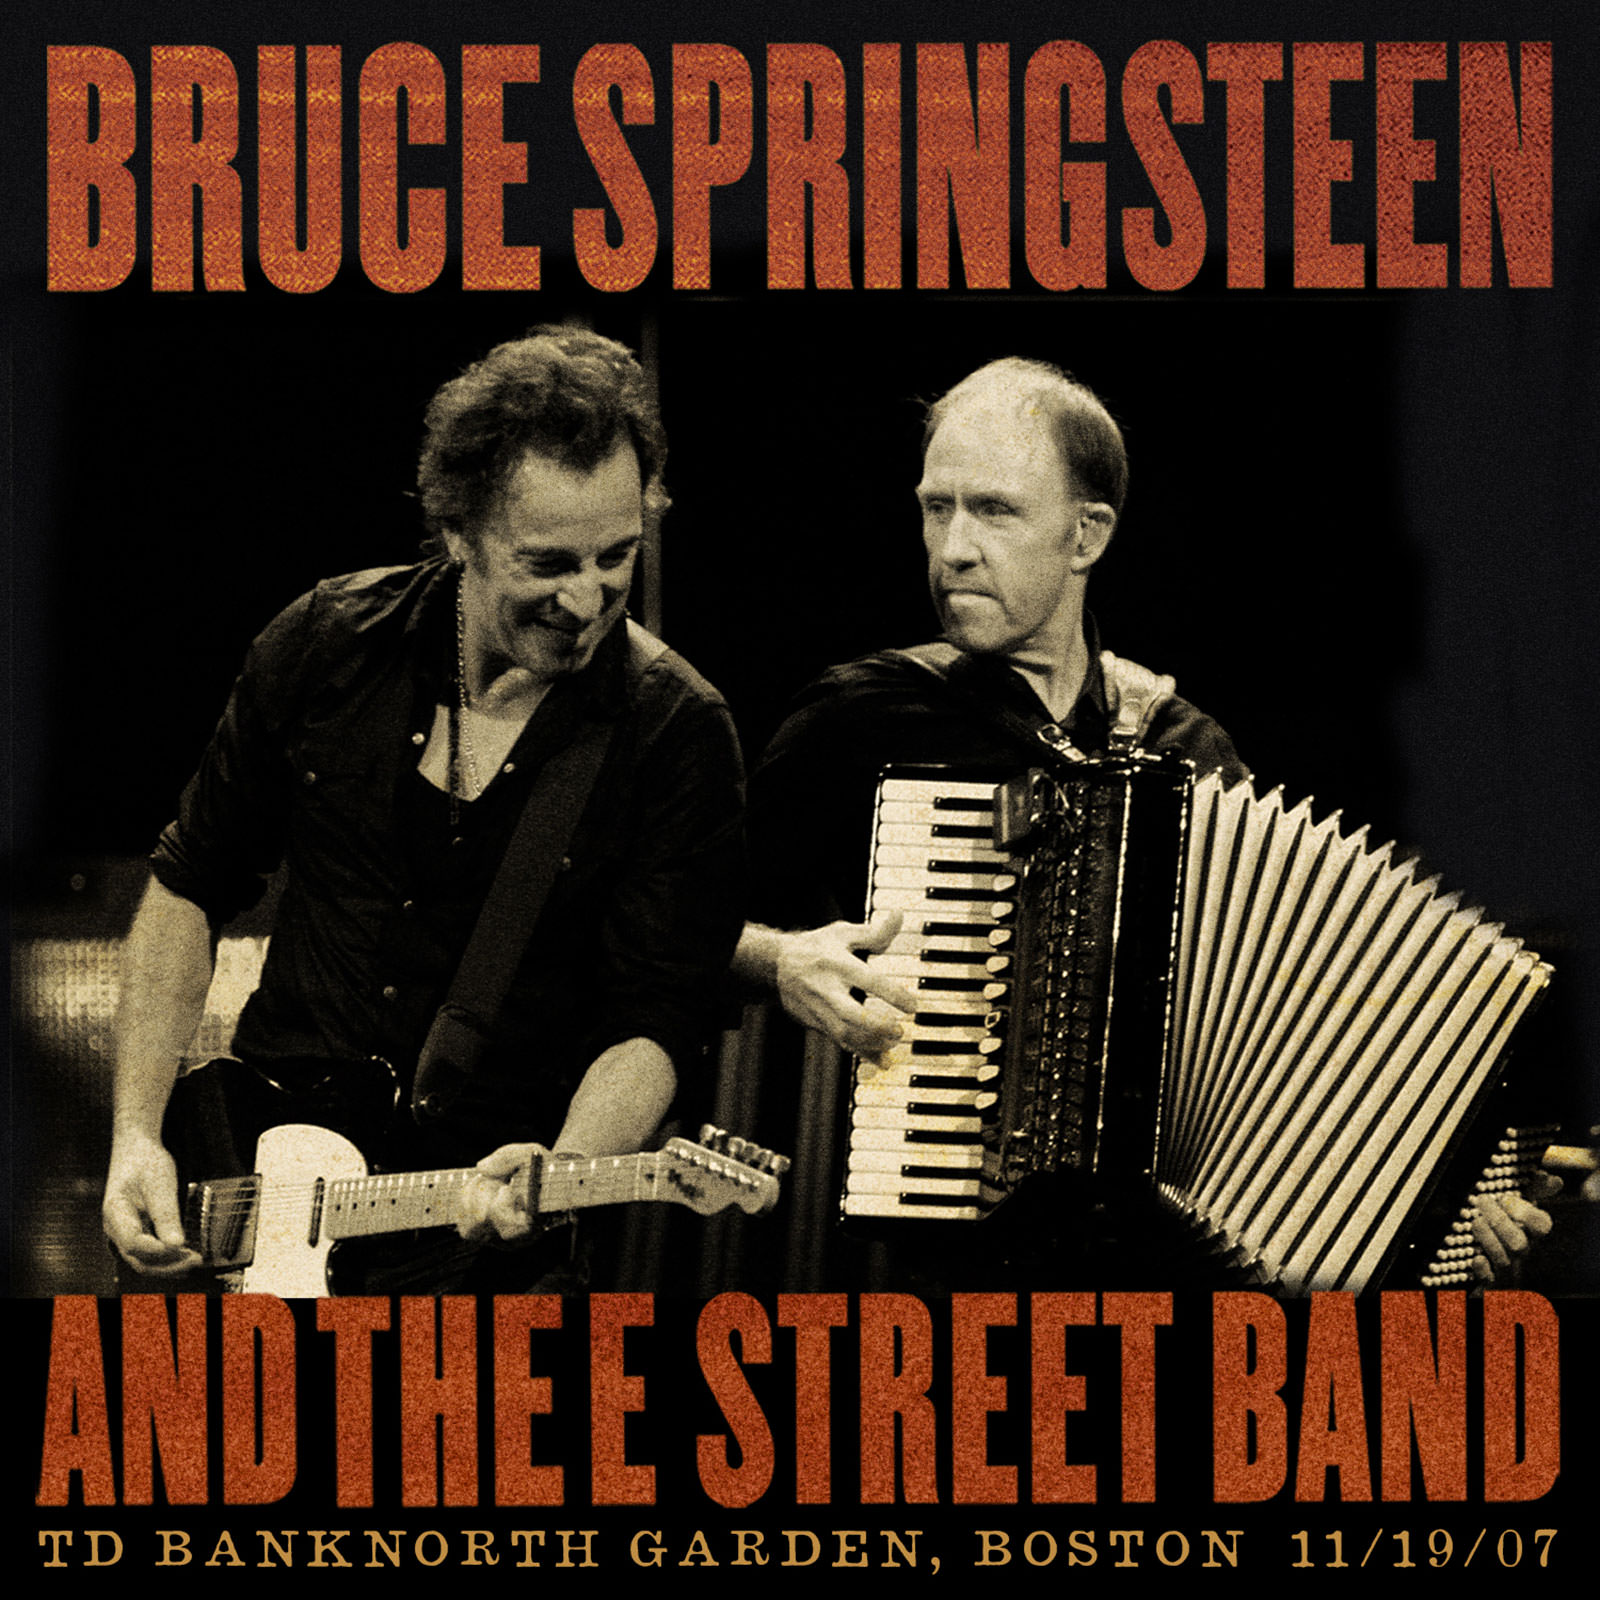 Bruce Springsteen & The E Street Band – 2007-11-19 TD Banknorth Garden, Boston, MA (2018) [FLAC 24bit/48kHz]